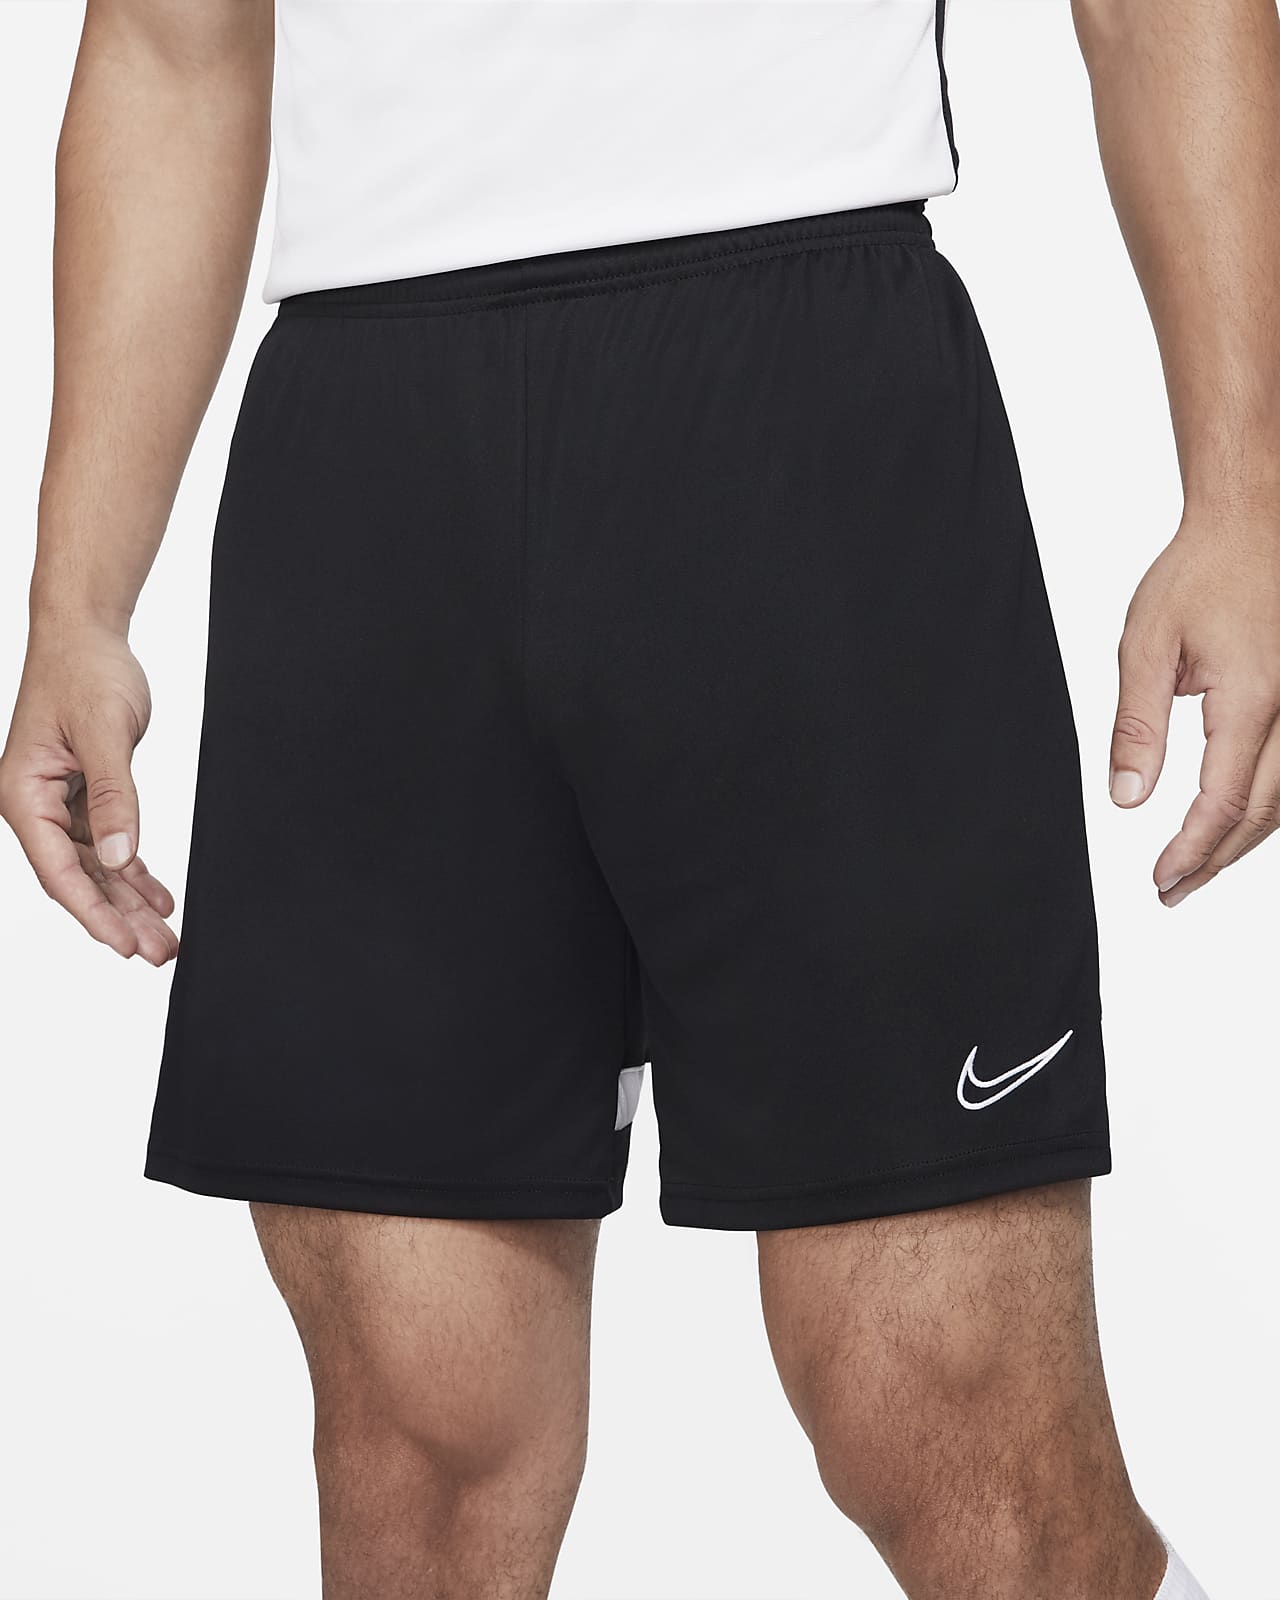 Nike Women's Dri-FIT Knit II Soccer Shorts - Black / White